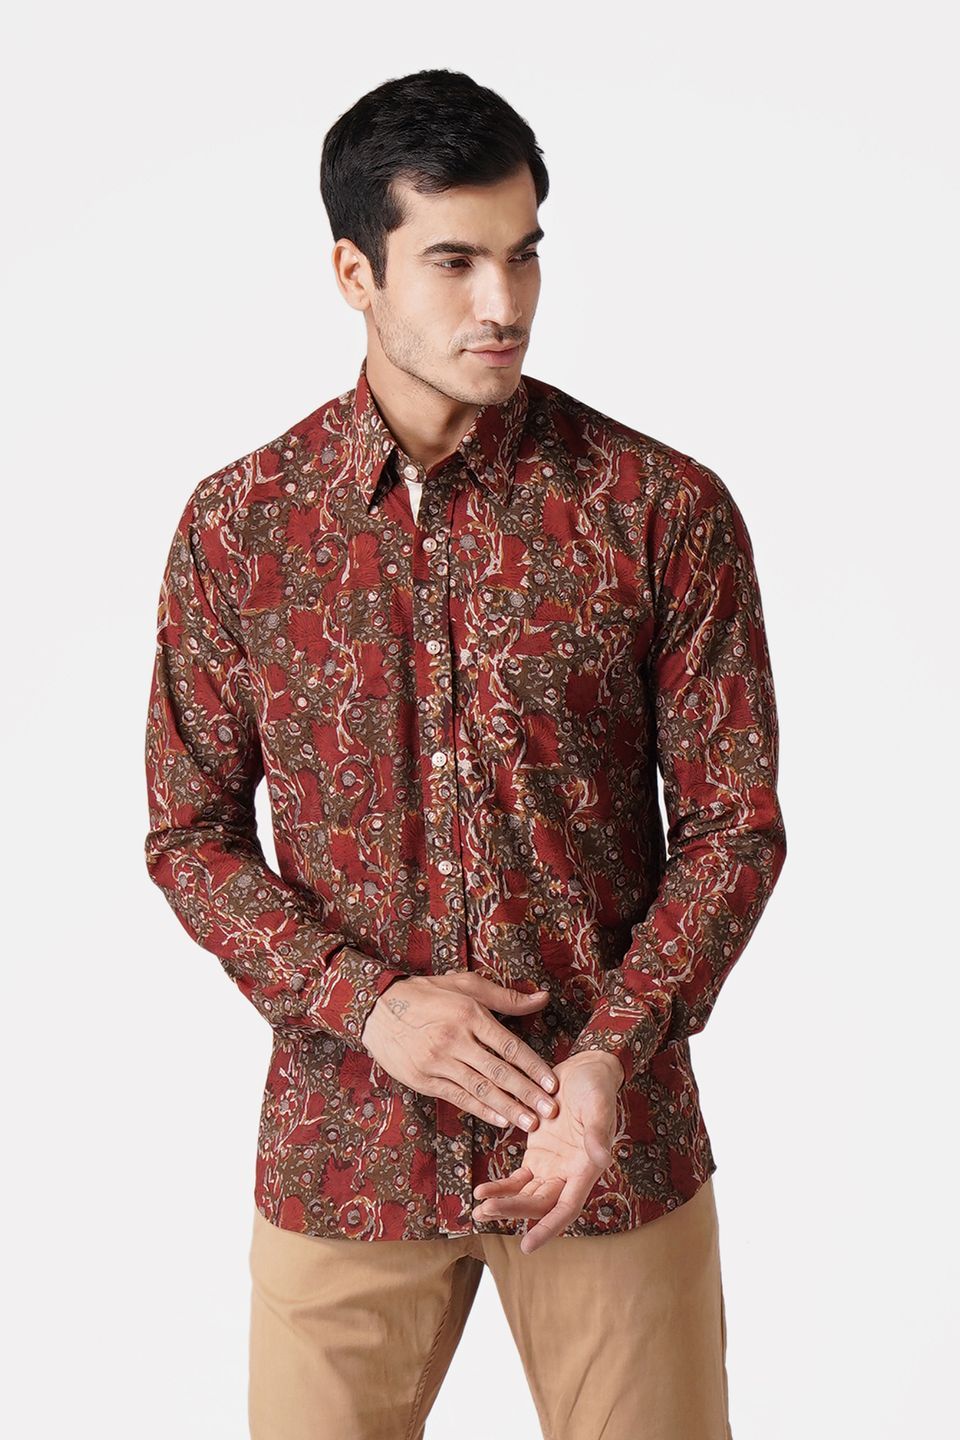 WINTAGE Men's Jaipur Cotton Tropical Hawaiian Batik Casual Shirt: Red